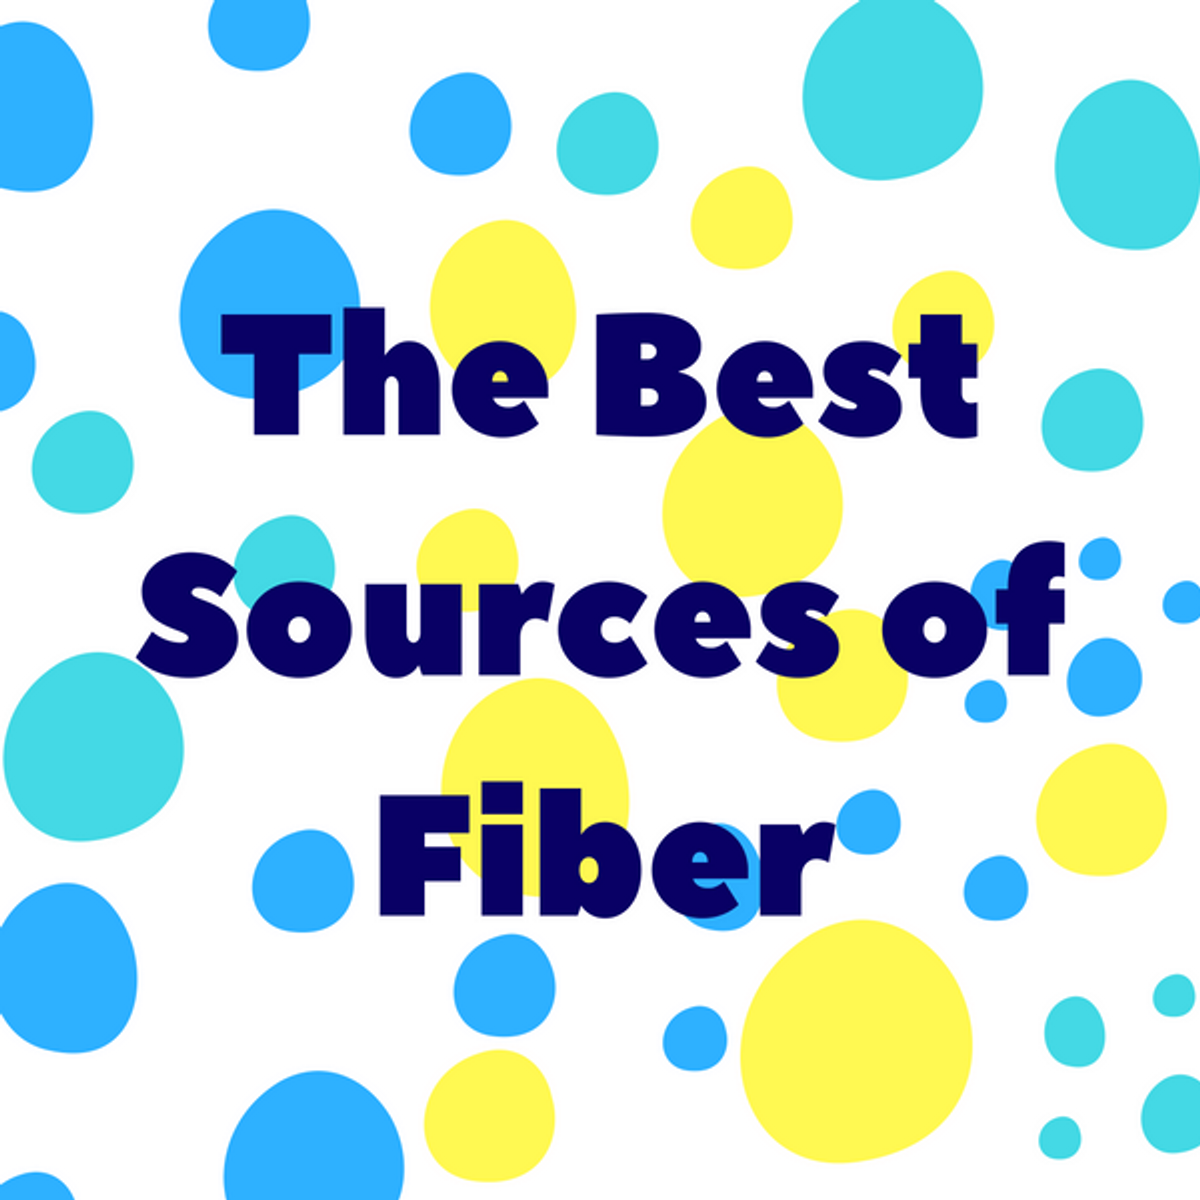 12 Amazing Sources of Fiber